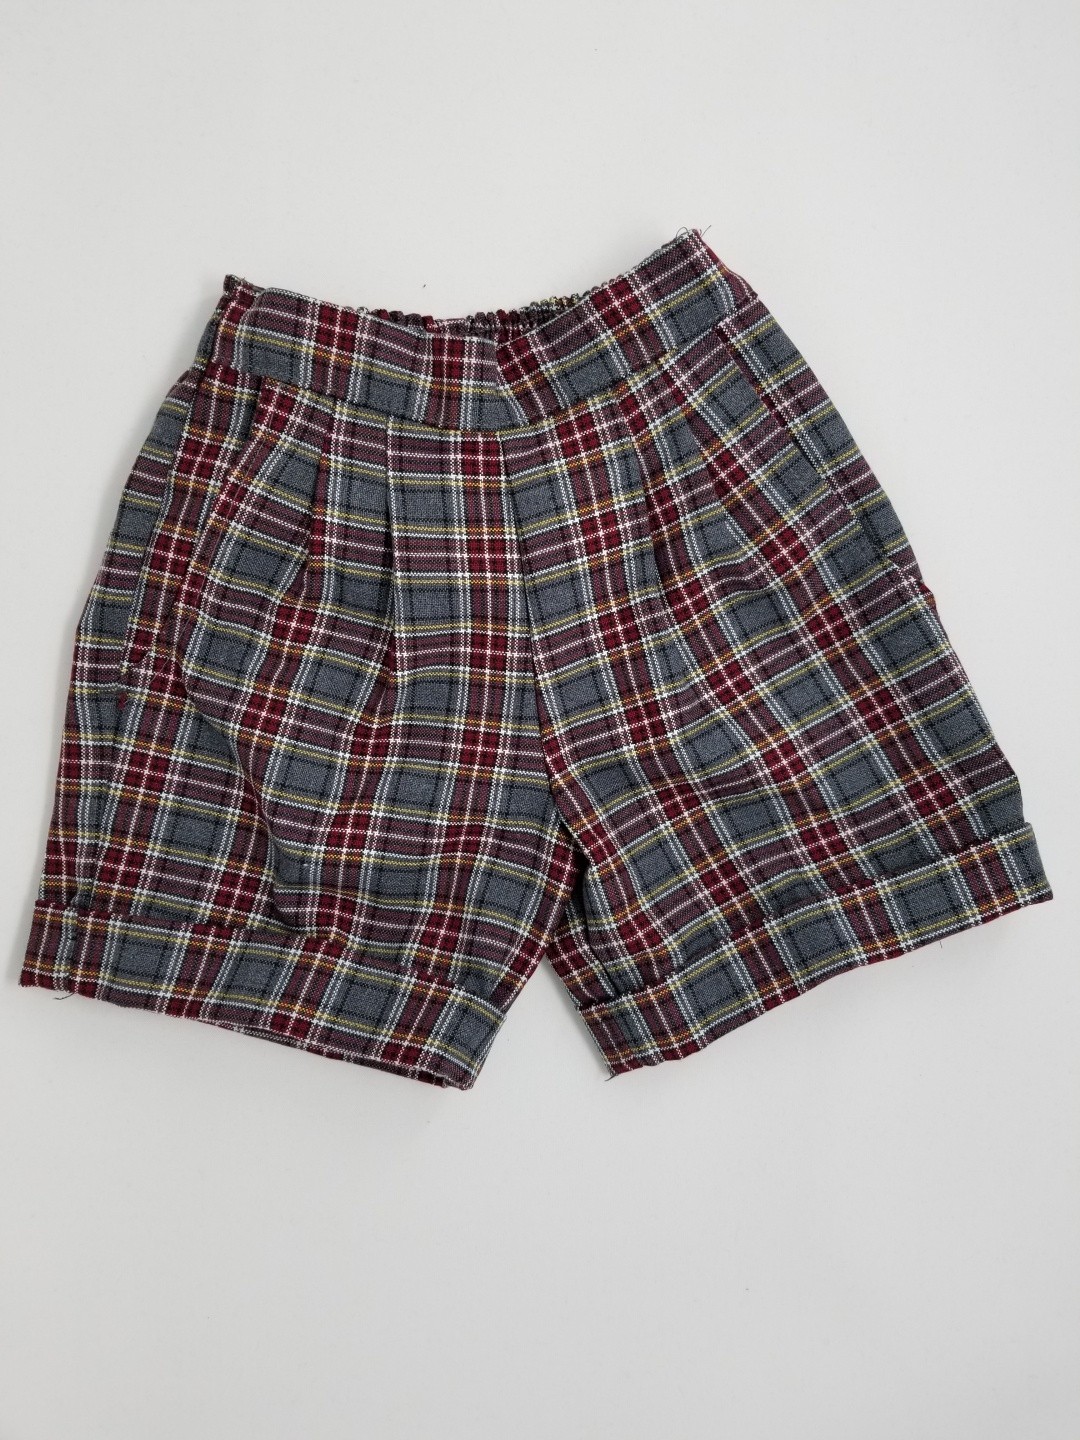 Girls Plaid Shorts- Cuffed hem-Plaid 9